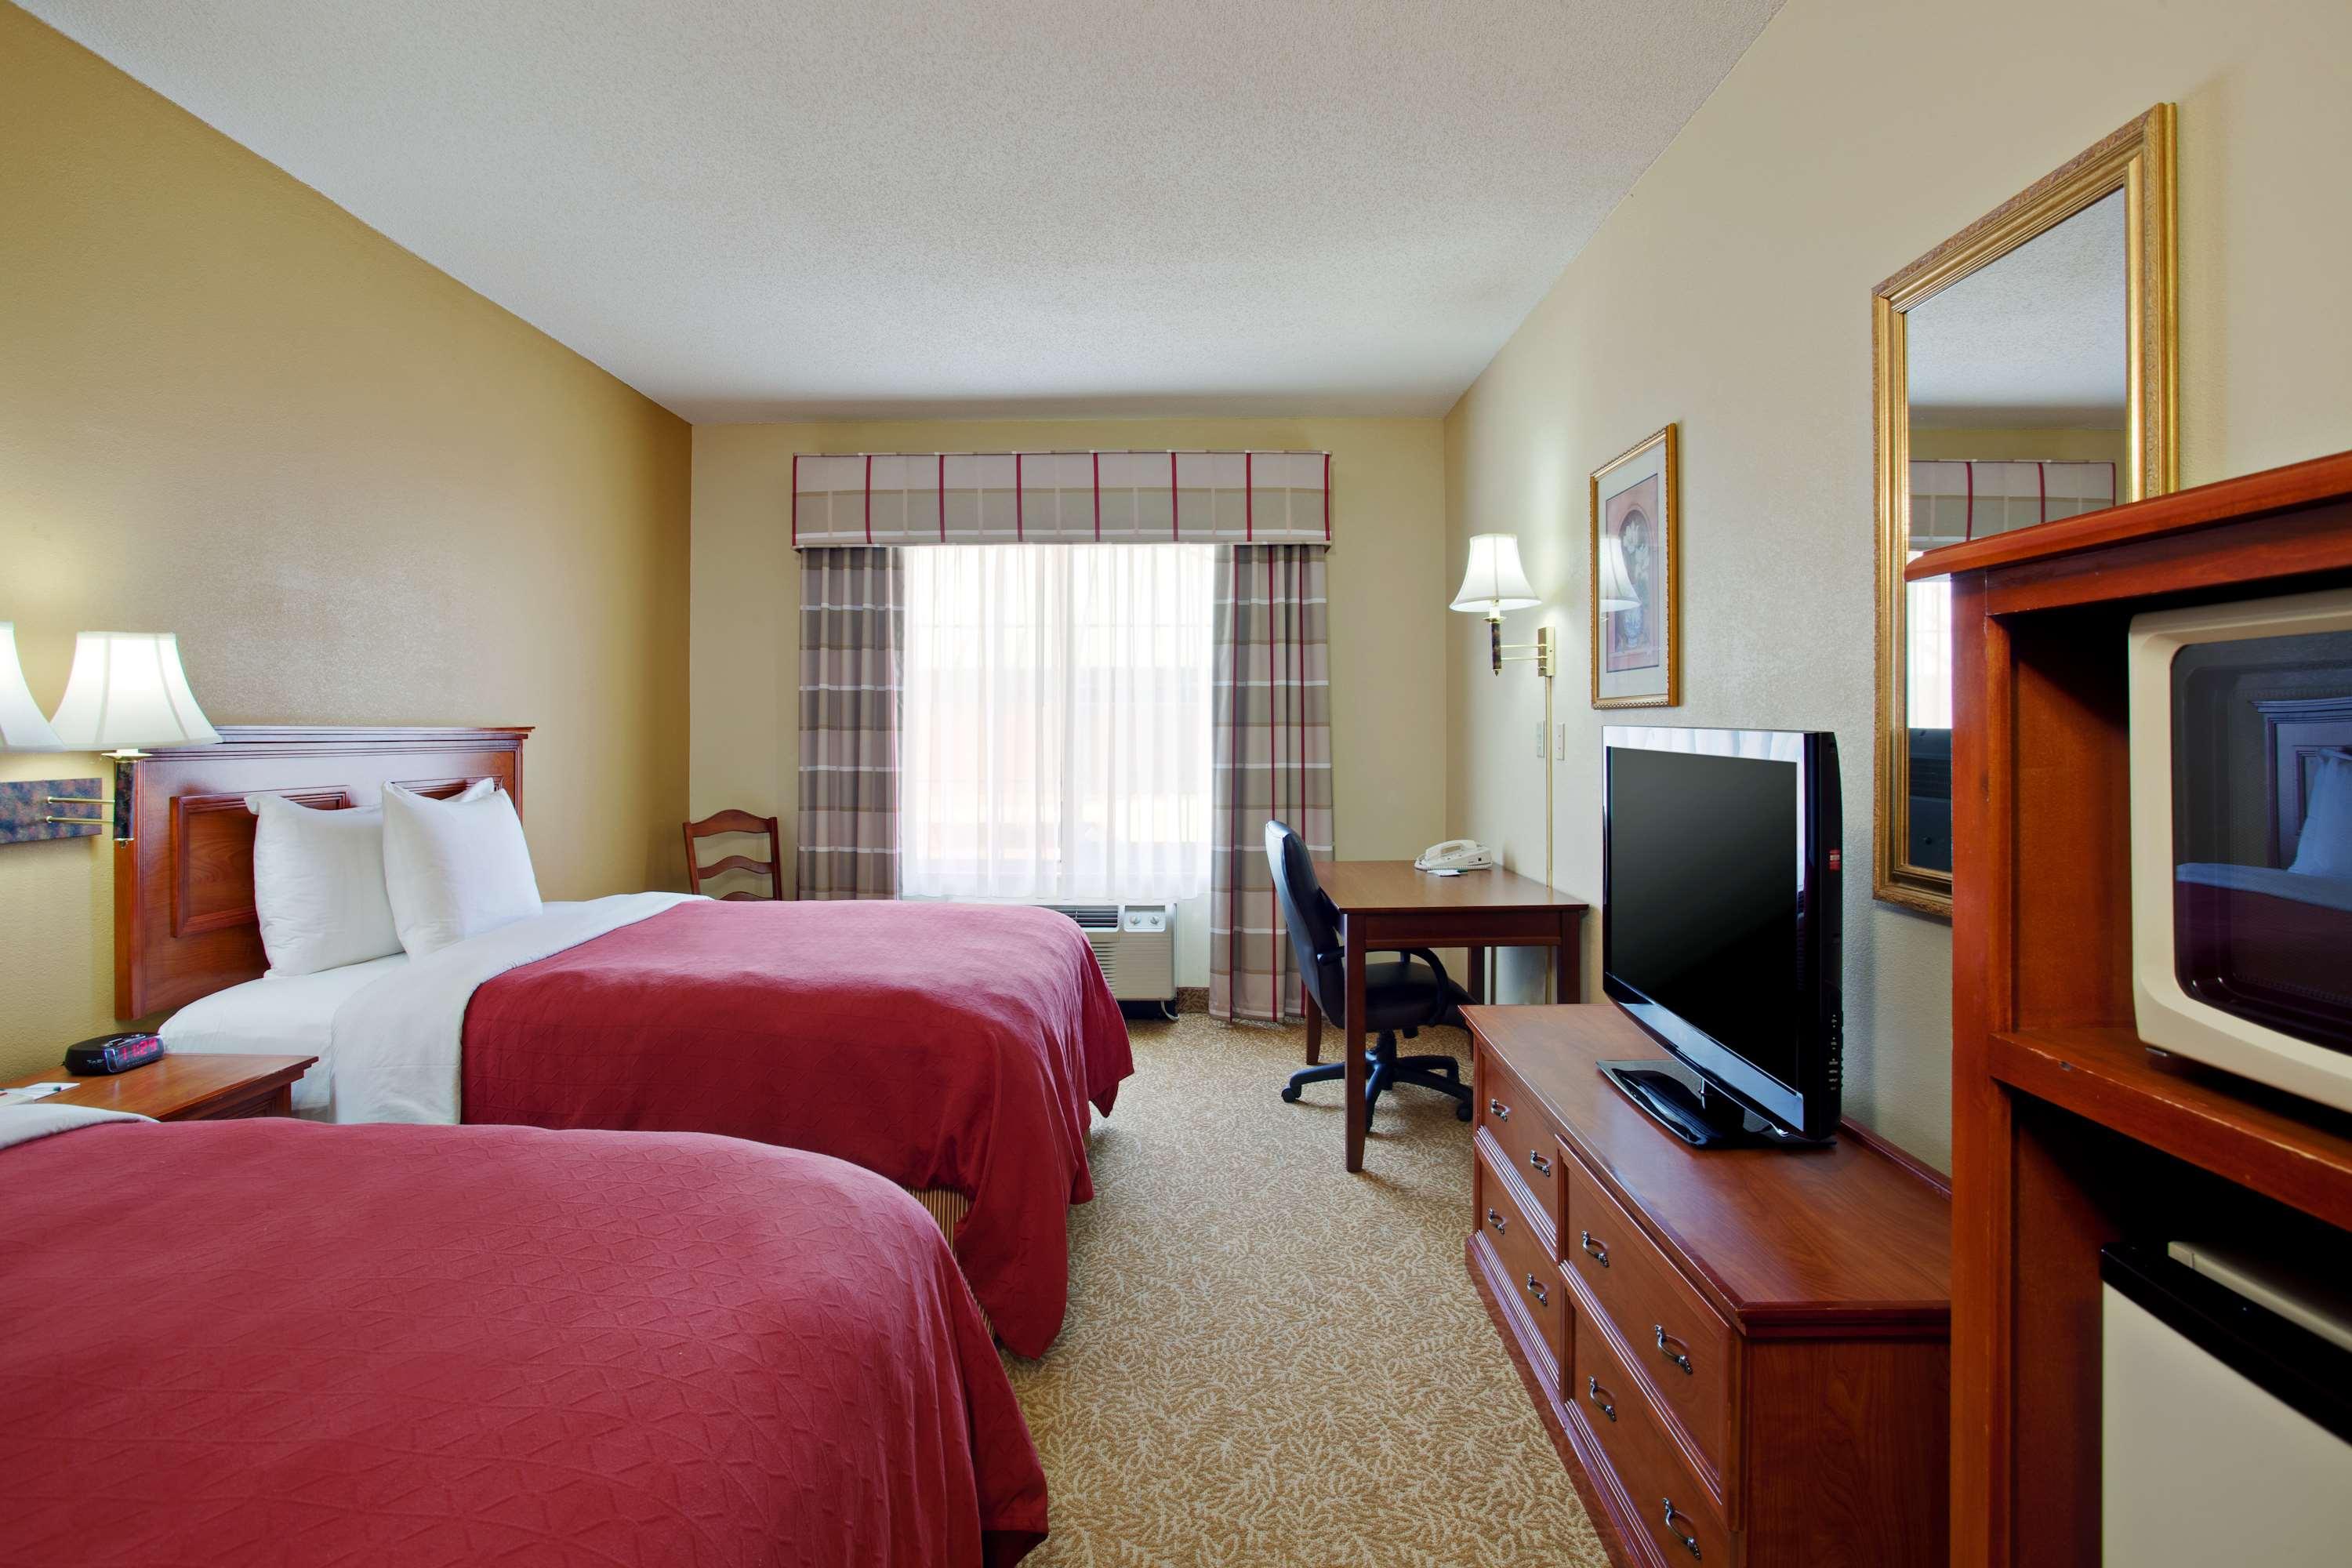 Country Inn & Suites by Radisson, Goldsboro, NC